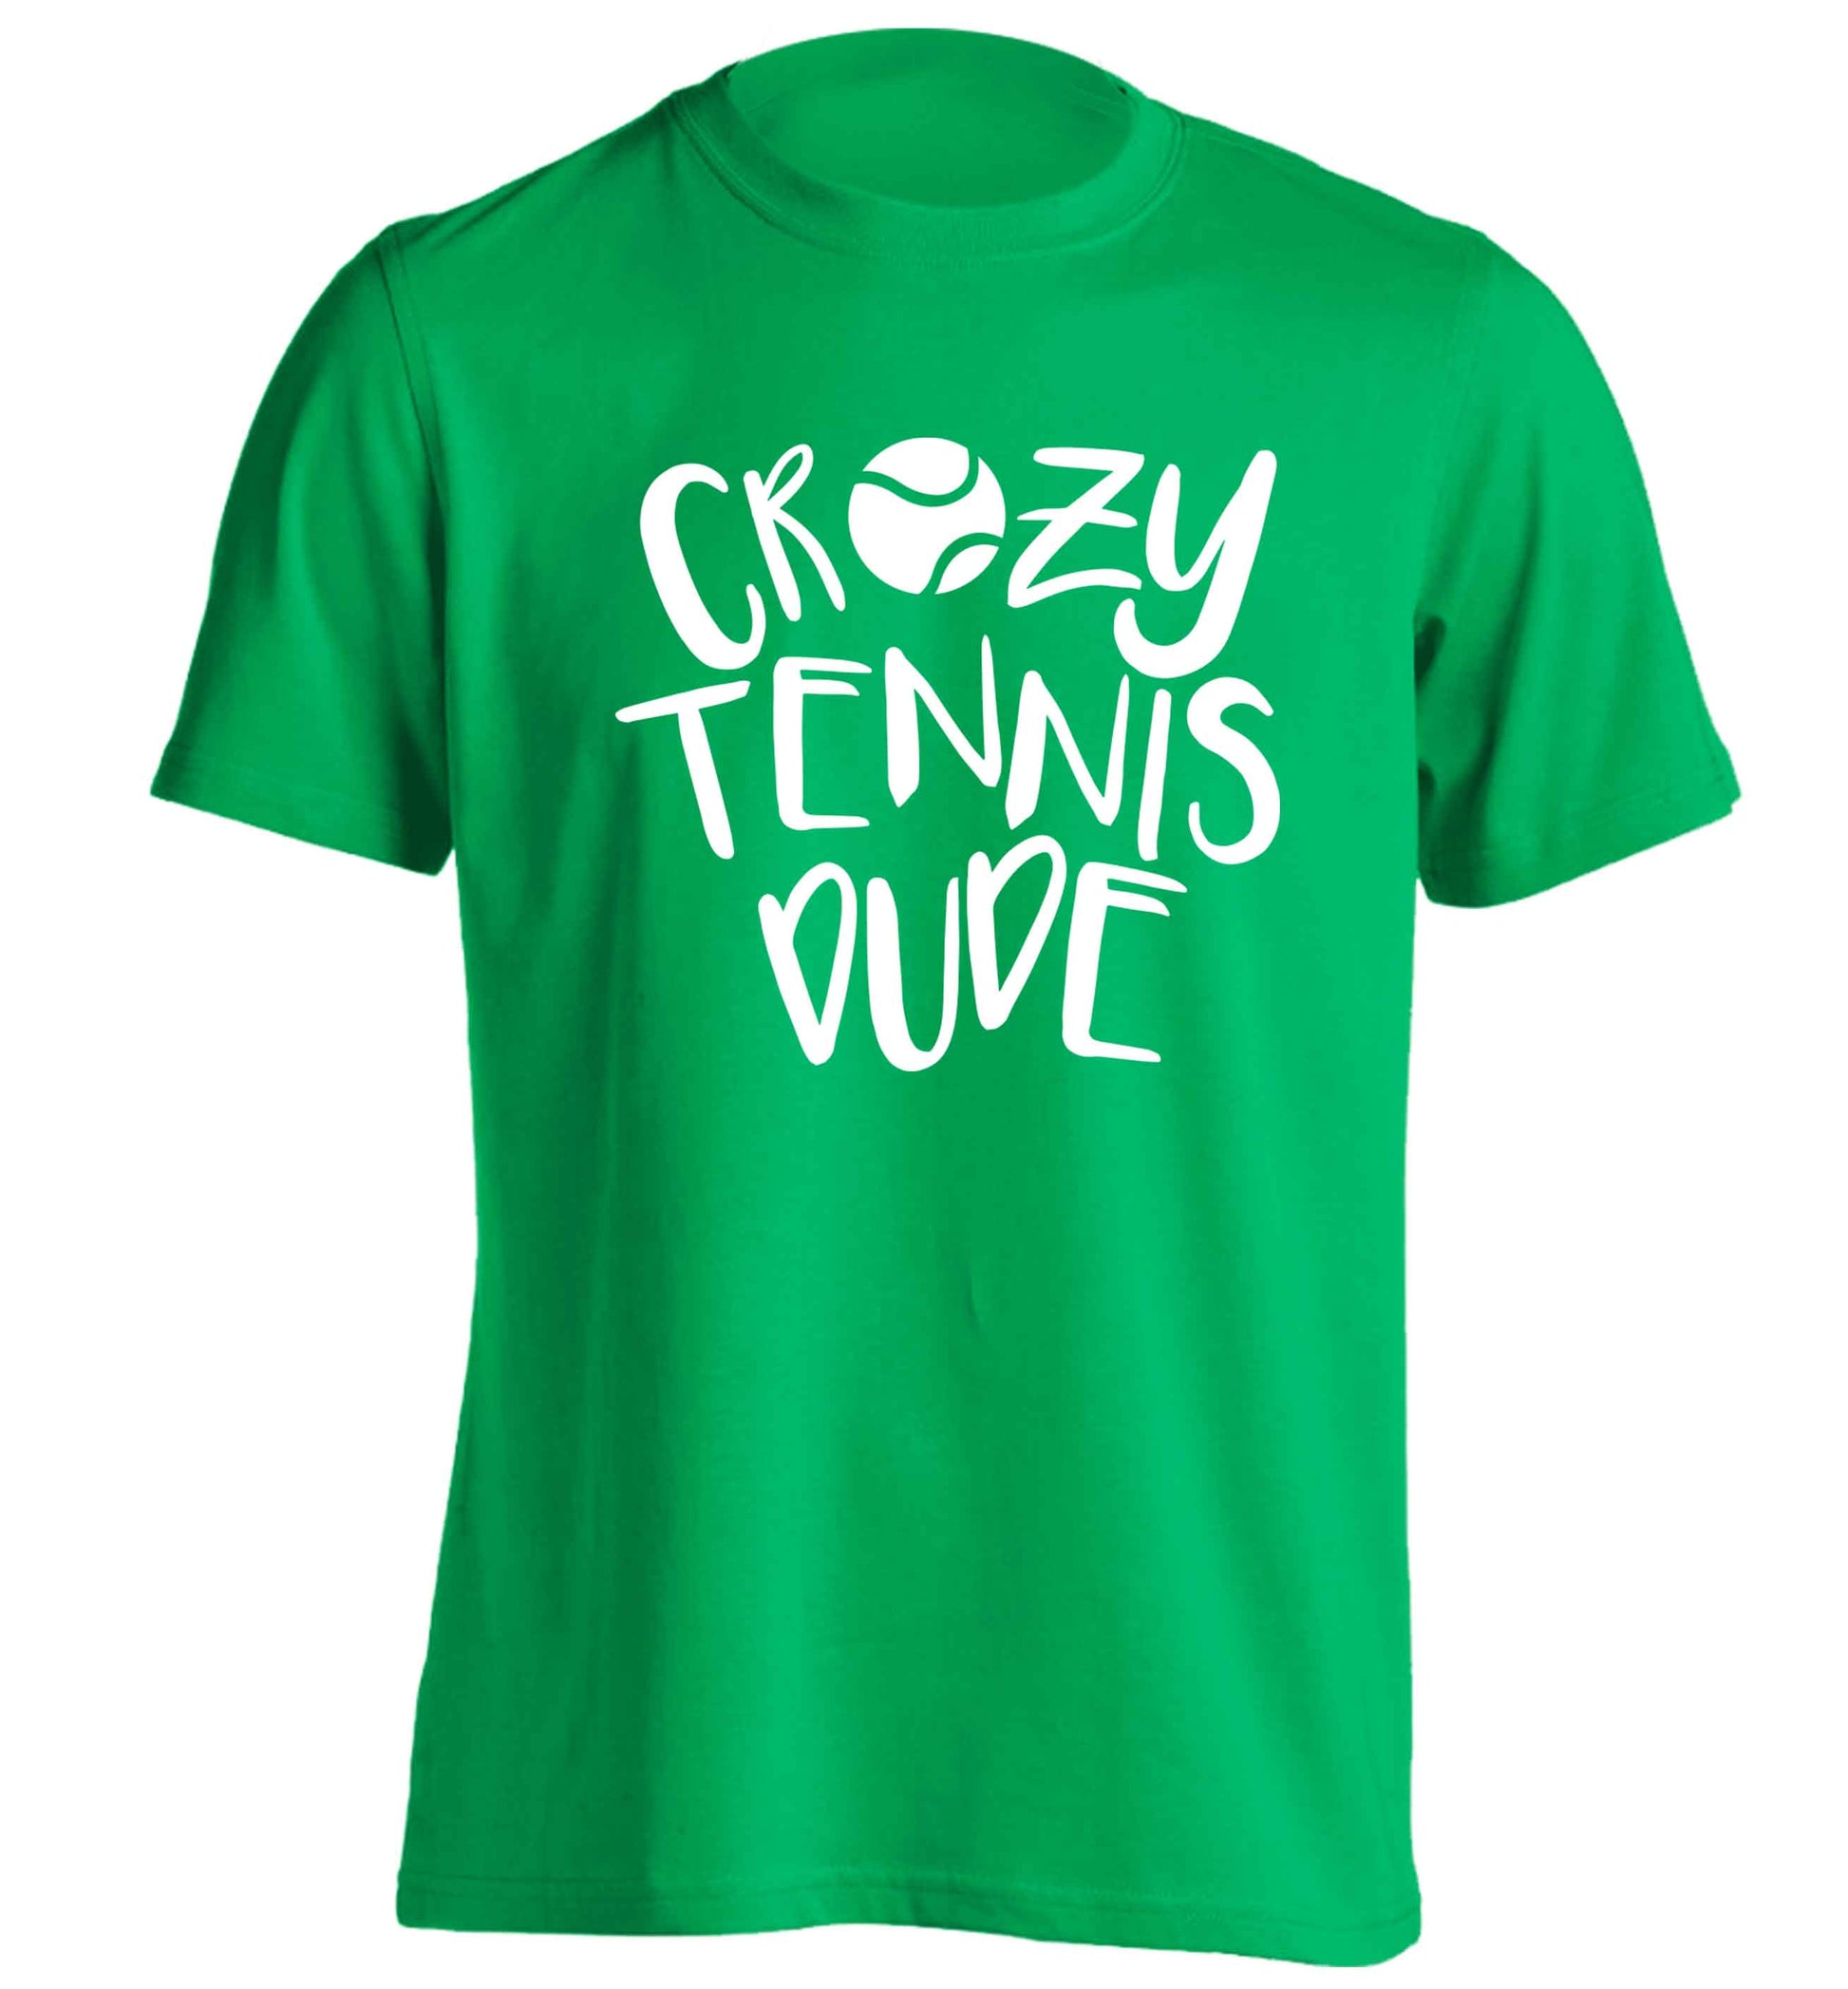 Crazy tennis dude adults unisex green Tshirt 2XL